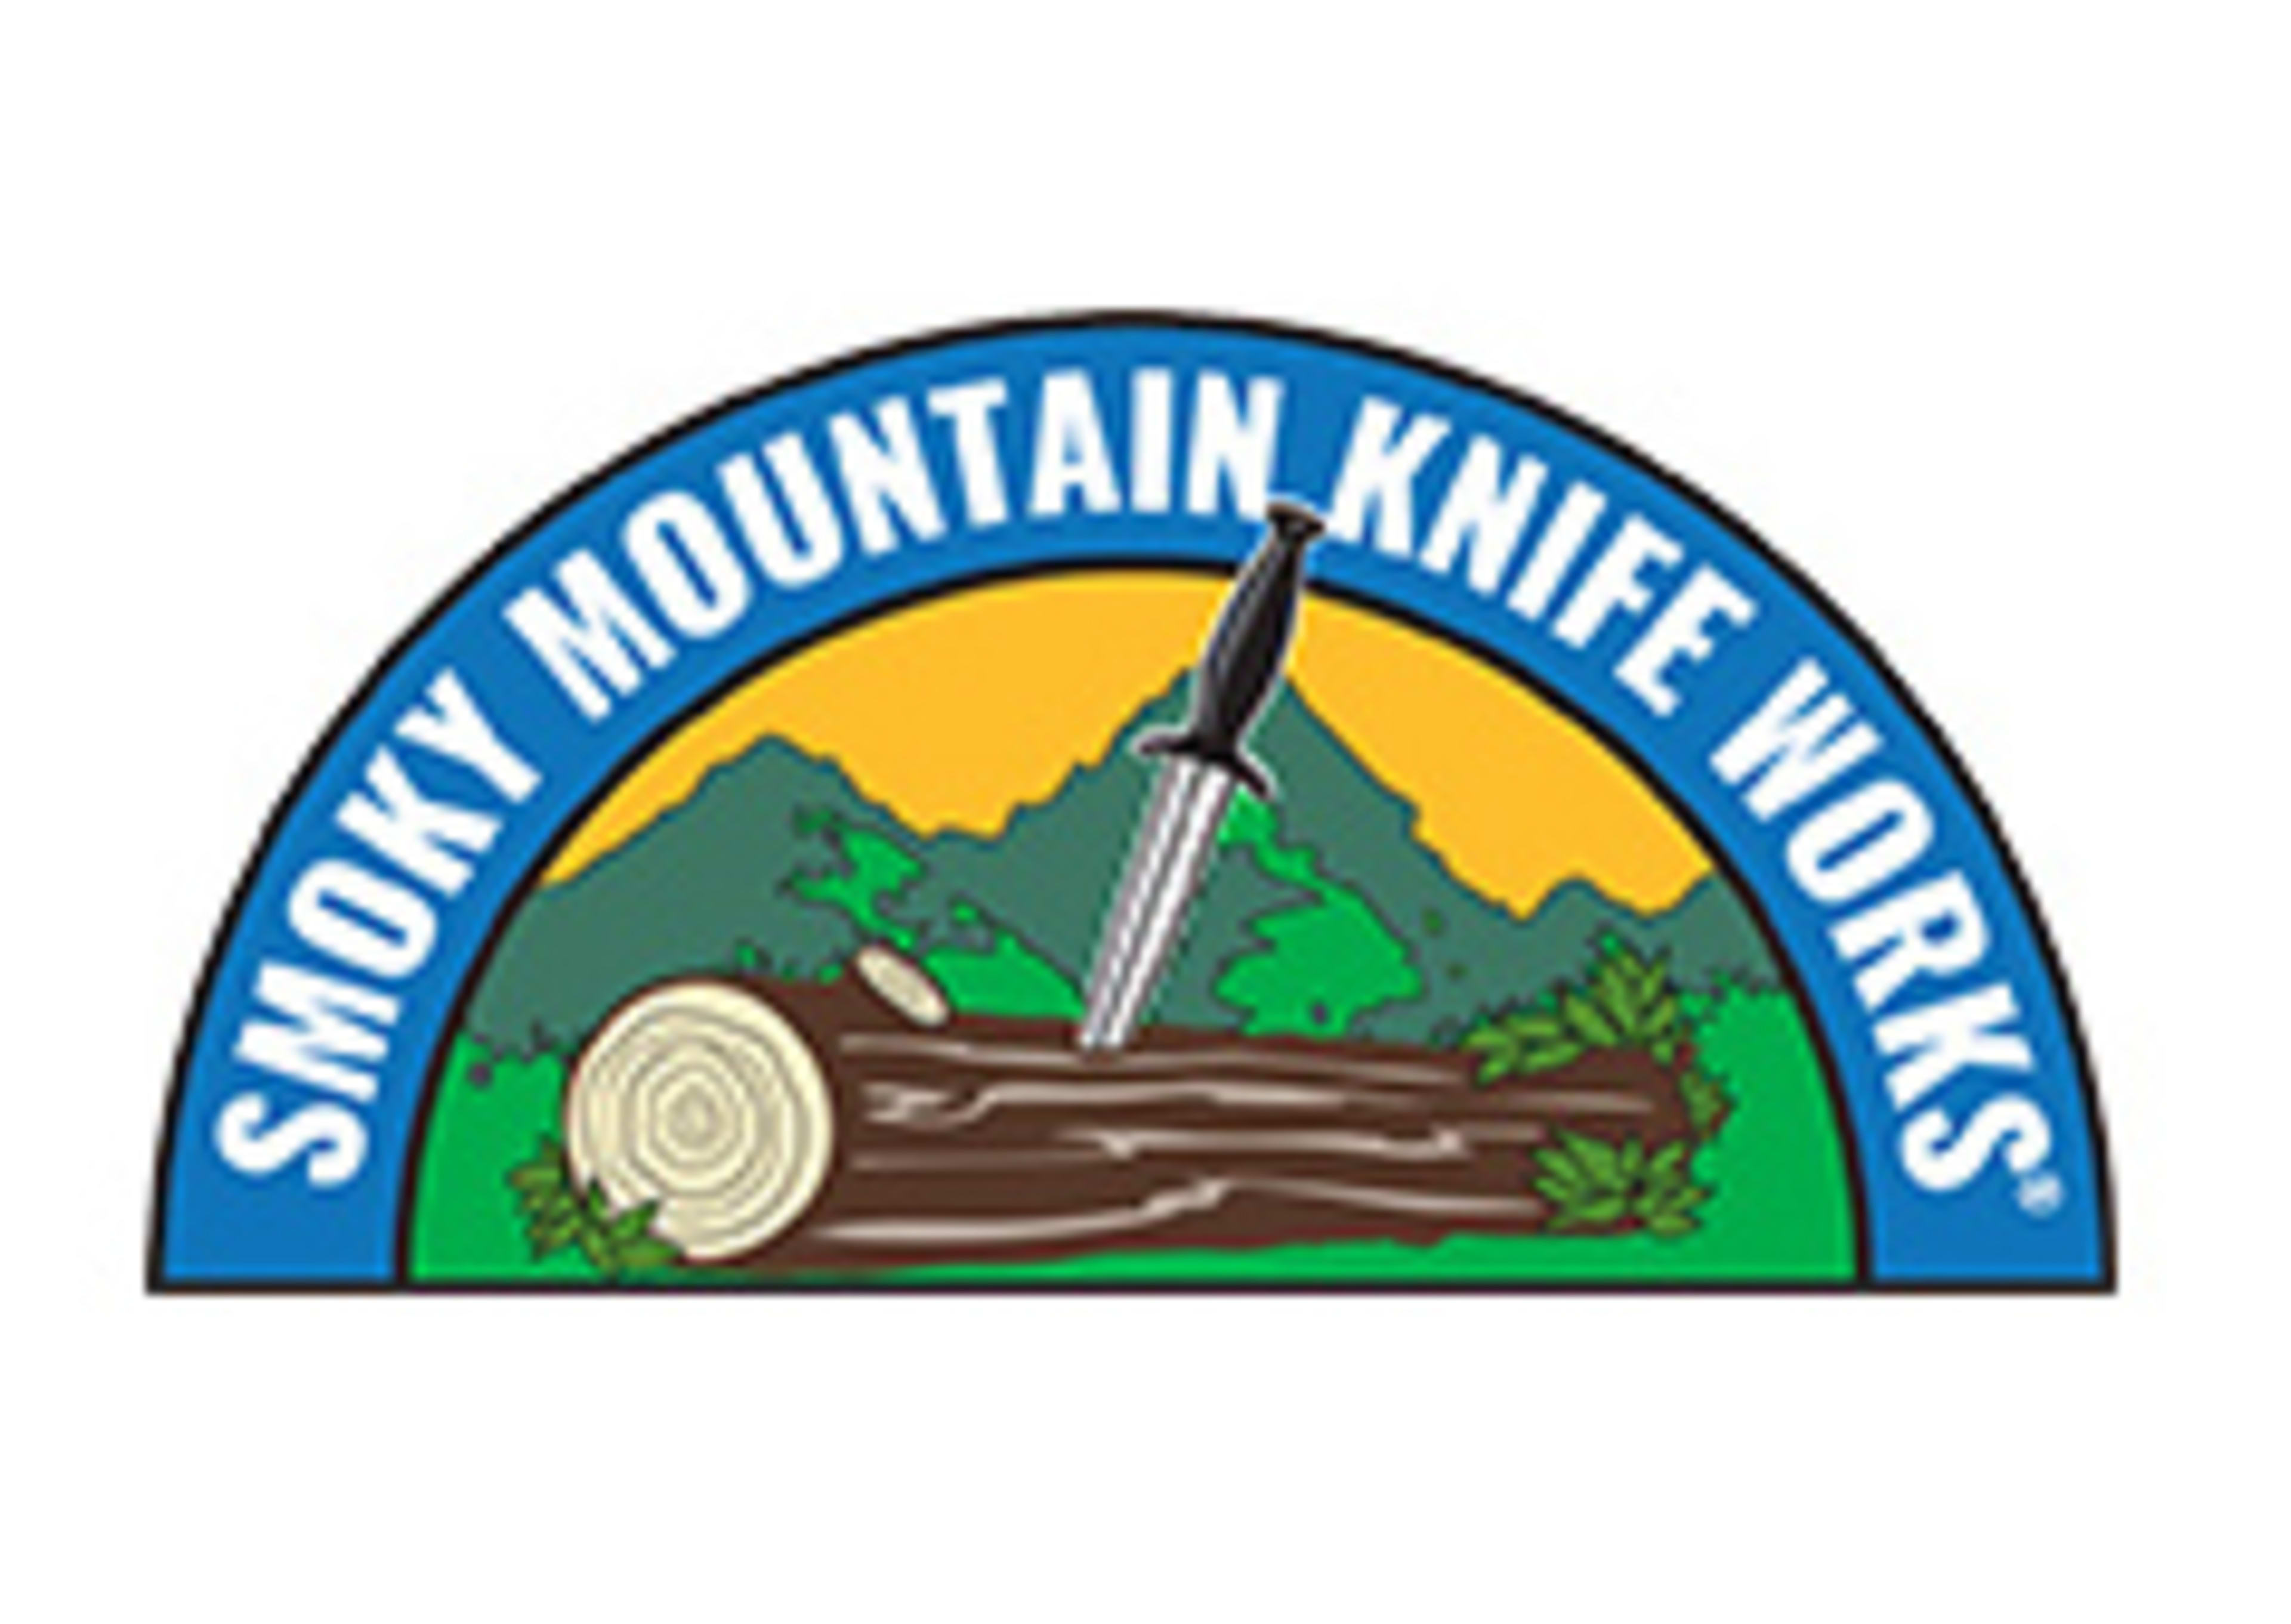 Smokey Mountain Knife Works Code